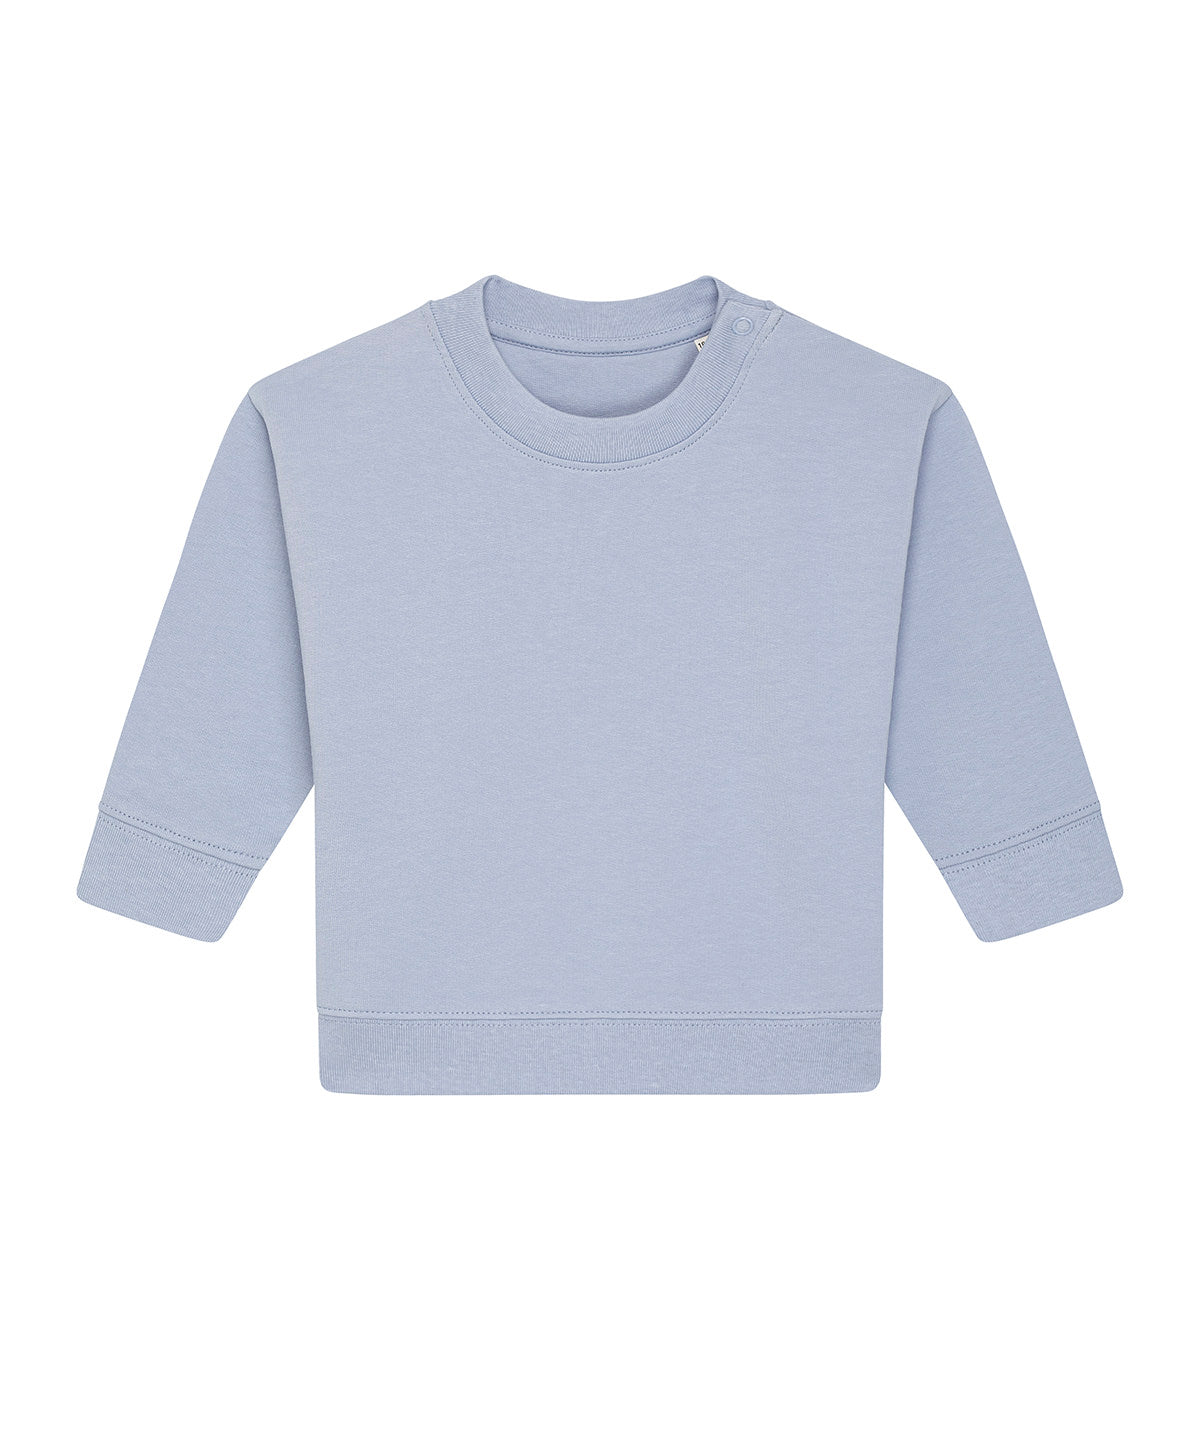 Essential Organic Baby Sweatshirt